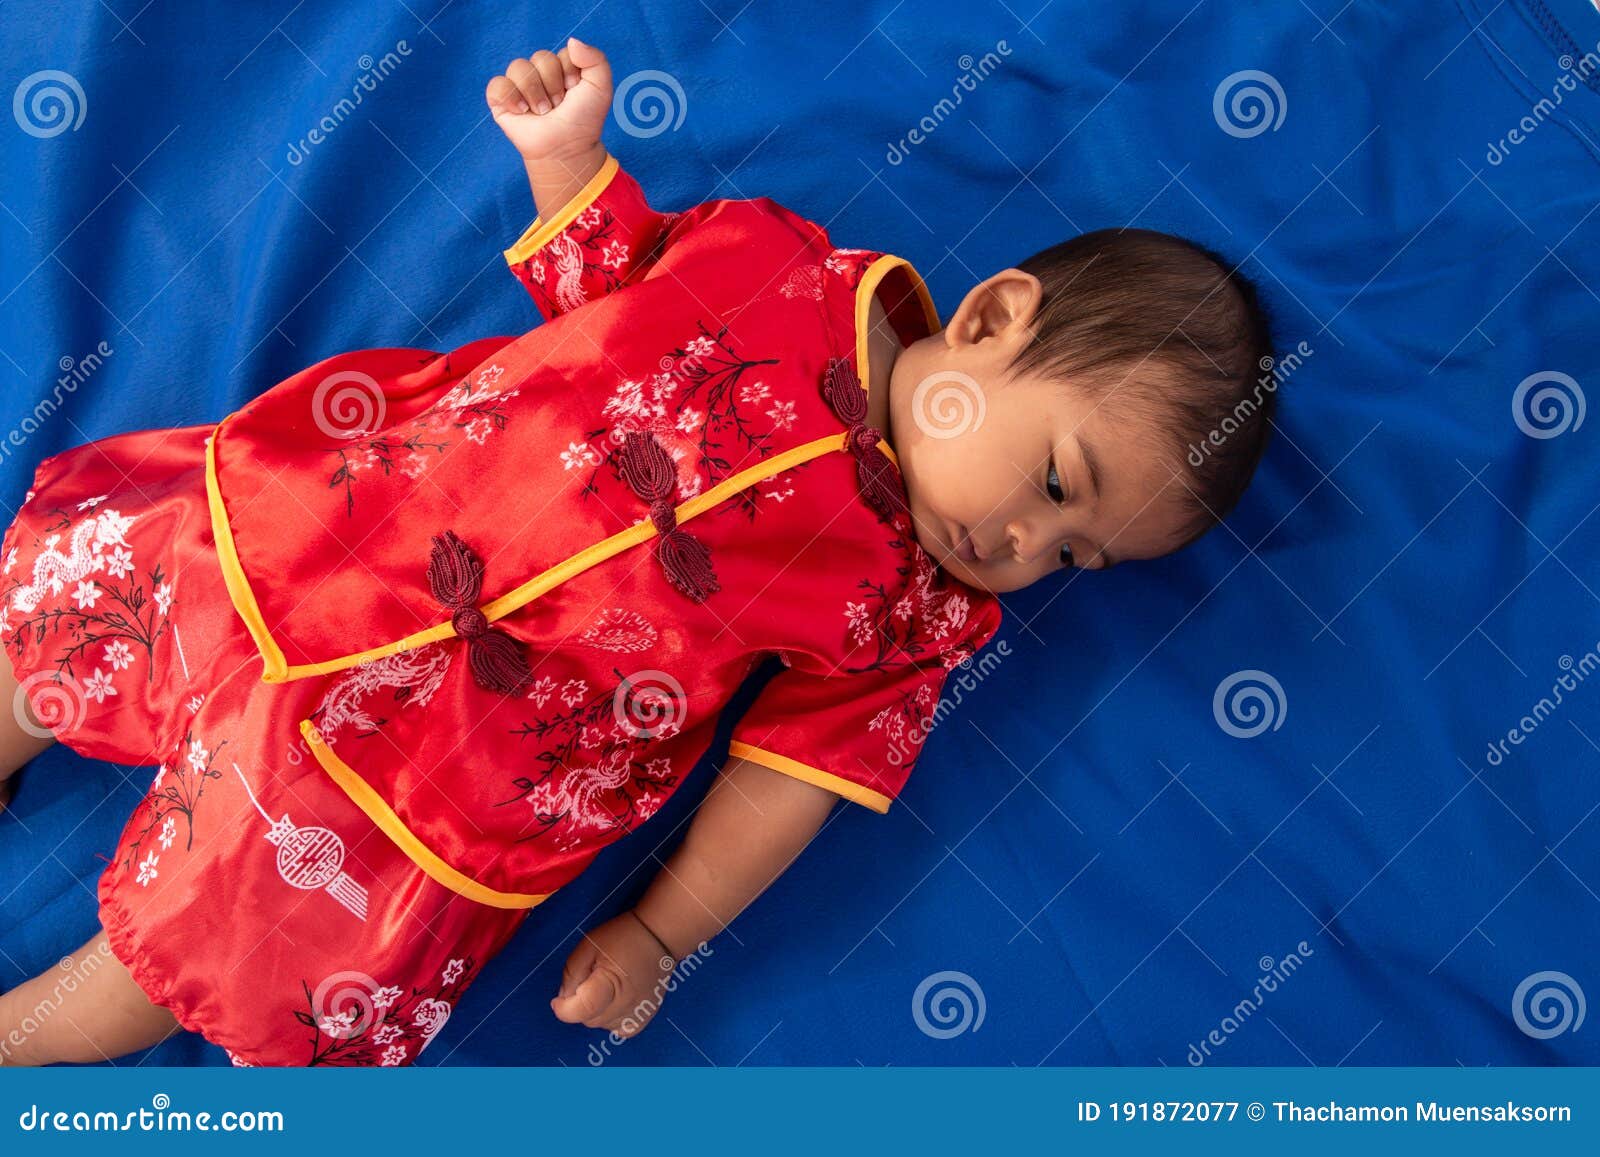 rol Komkommer Portaal Schattige Kleine Aziatische Baby in Chinese Kleding Stock Afbeelding -  Image of mooi, gelukkig: 191872077